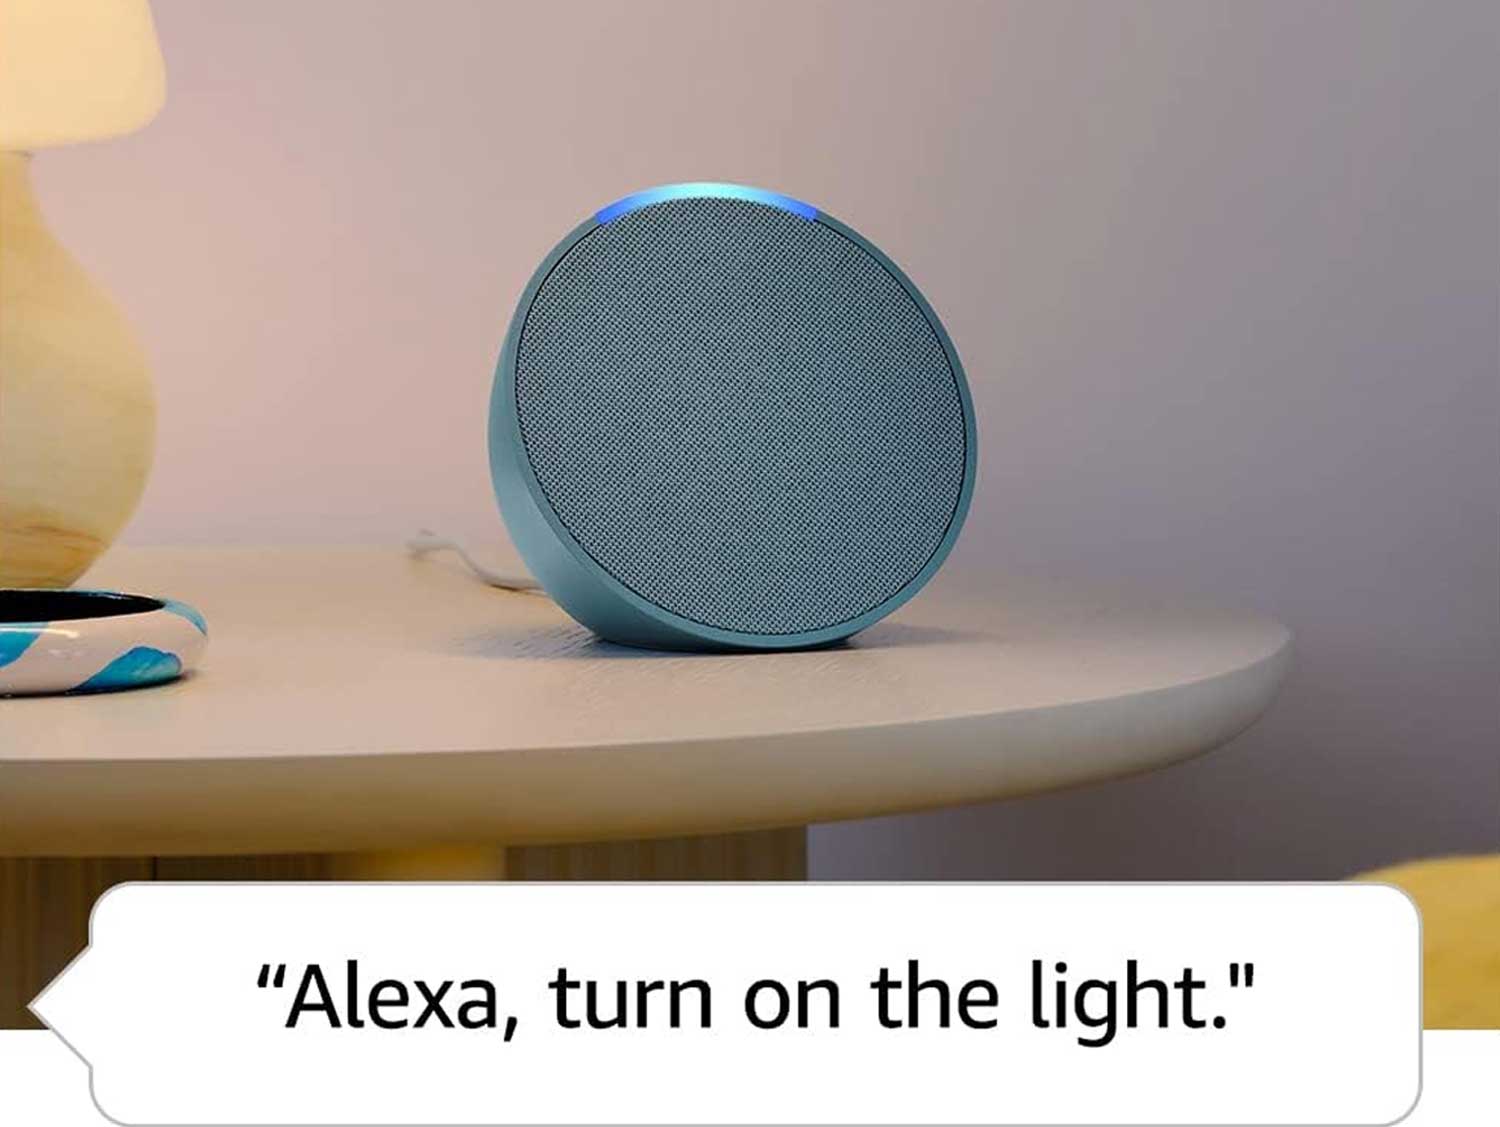 Amazon Echo Pop speaker